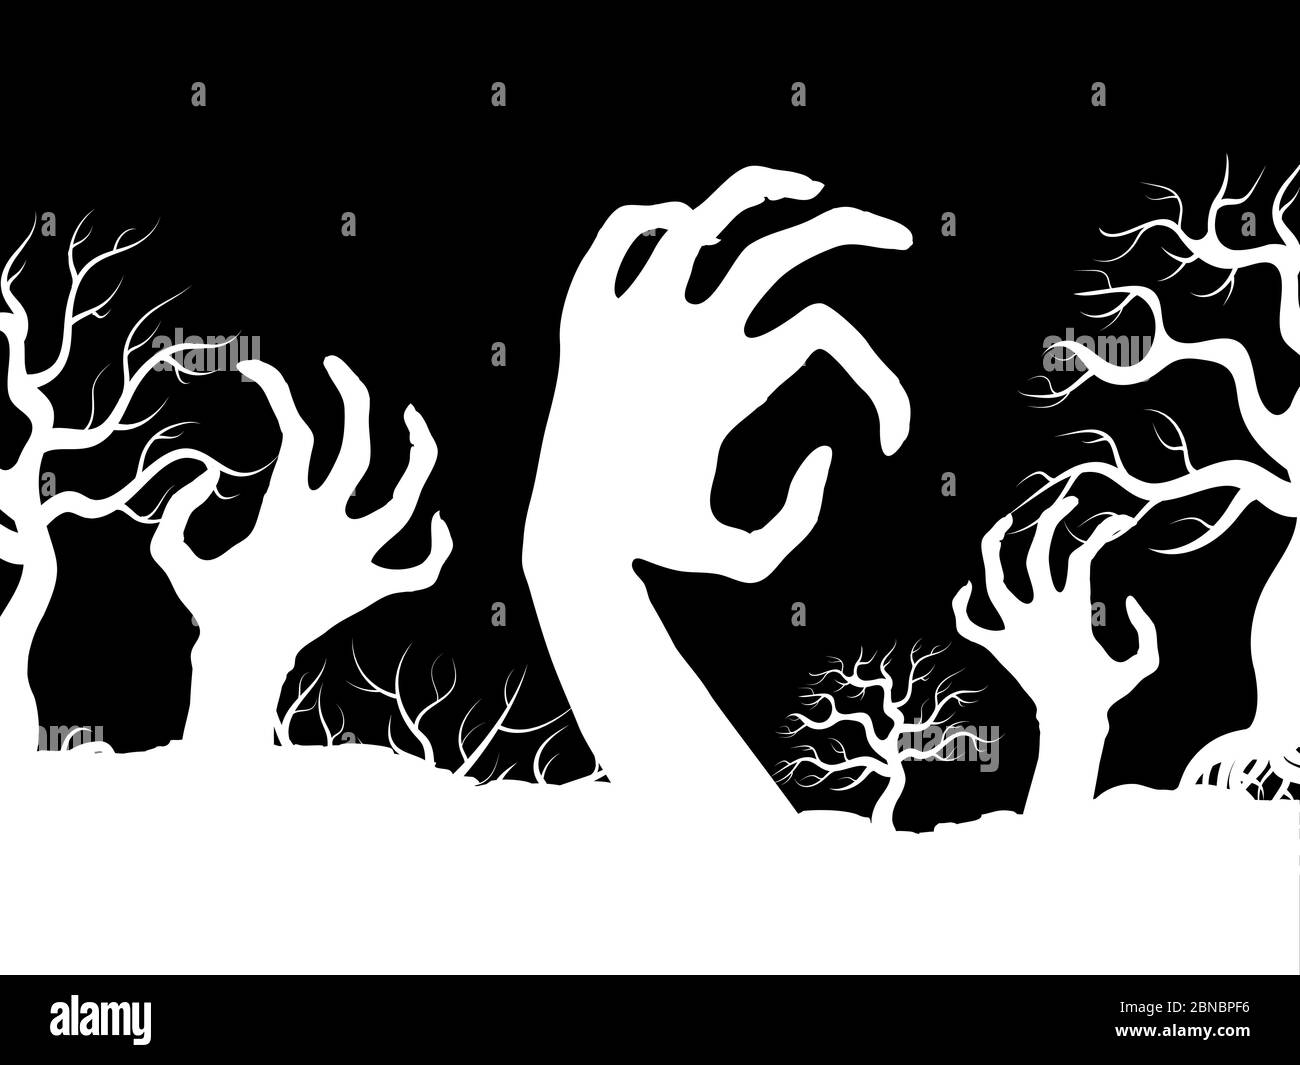 White horror zombi hands and tree silhouettes vector banner design illustration Stock Vector